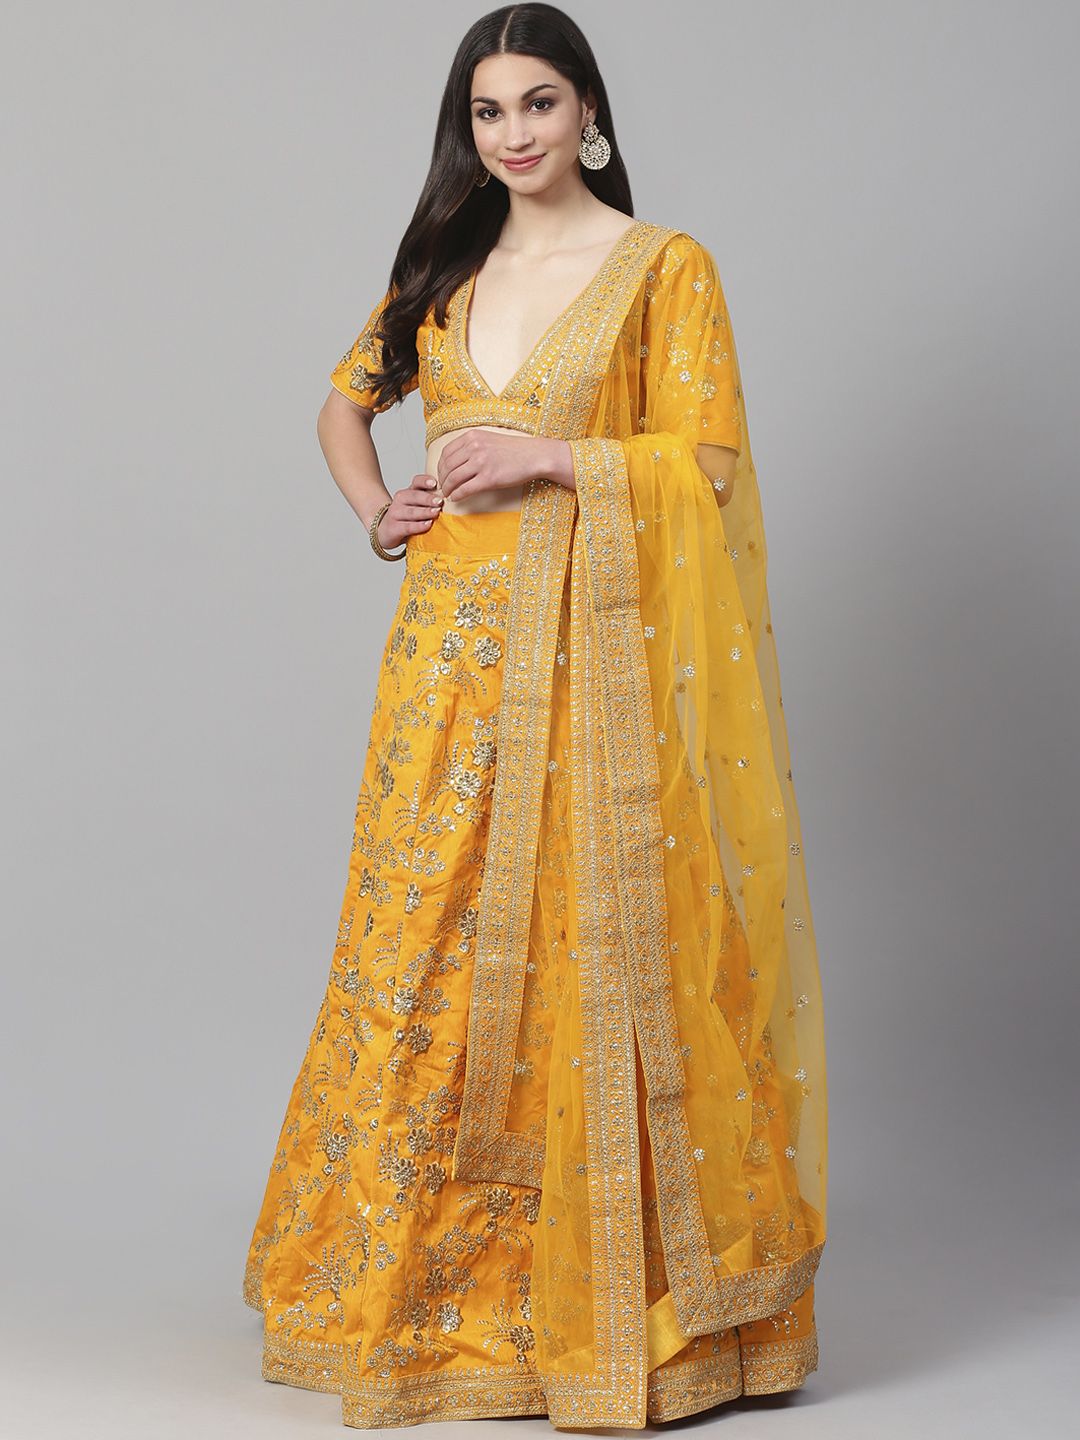 Readiprint Fashions Mustard & Golden Semi-Stitched Lehenga & Blouse with Dupatta Price in India